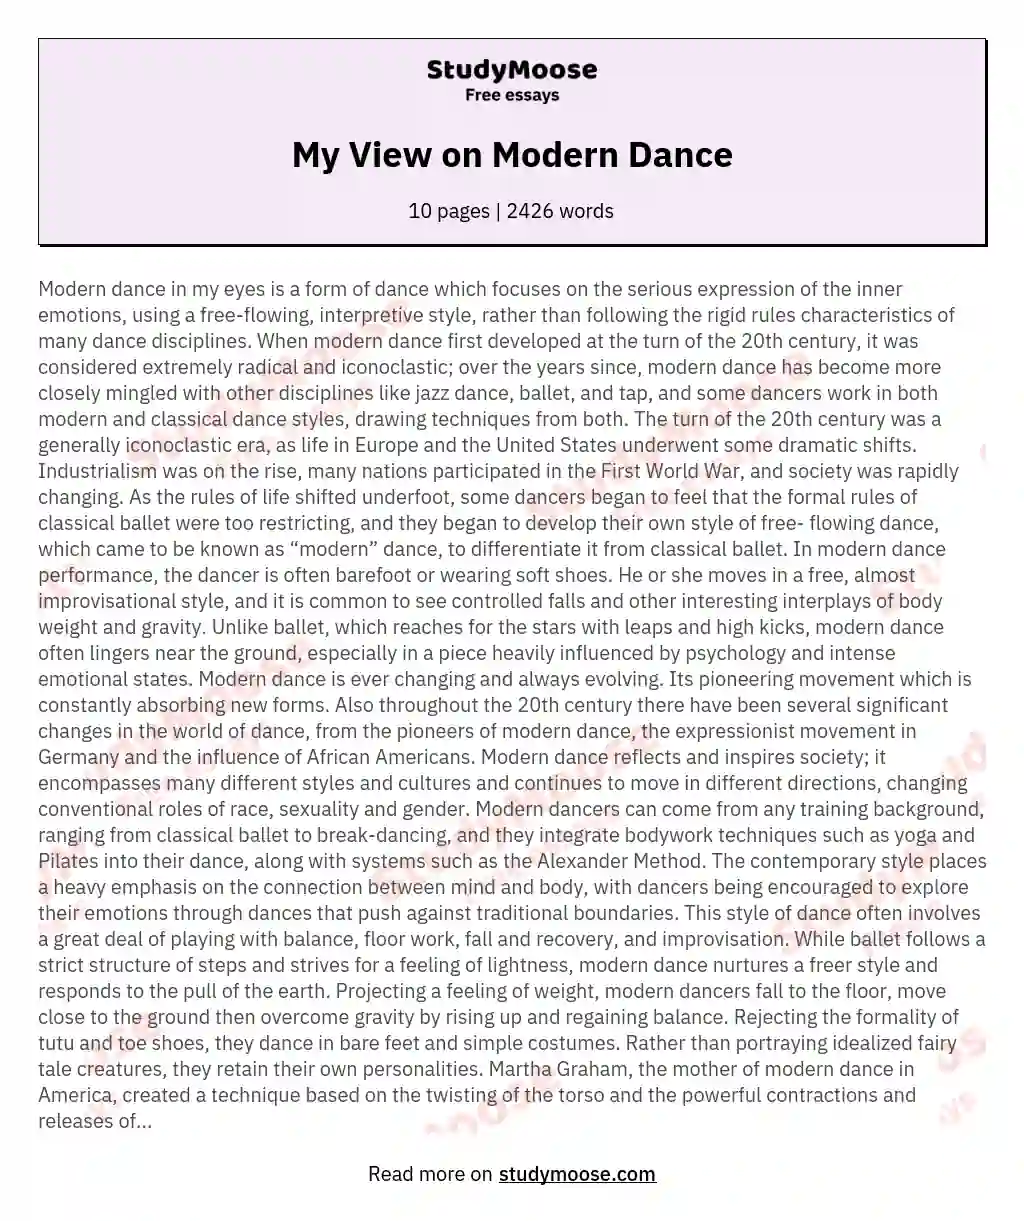 My View on Modern Dance essay